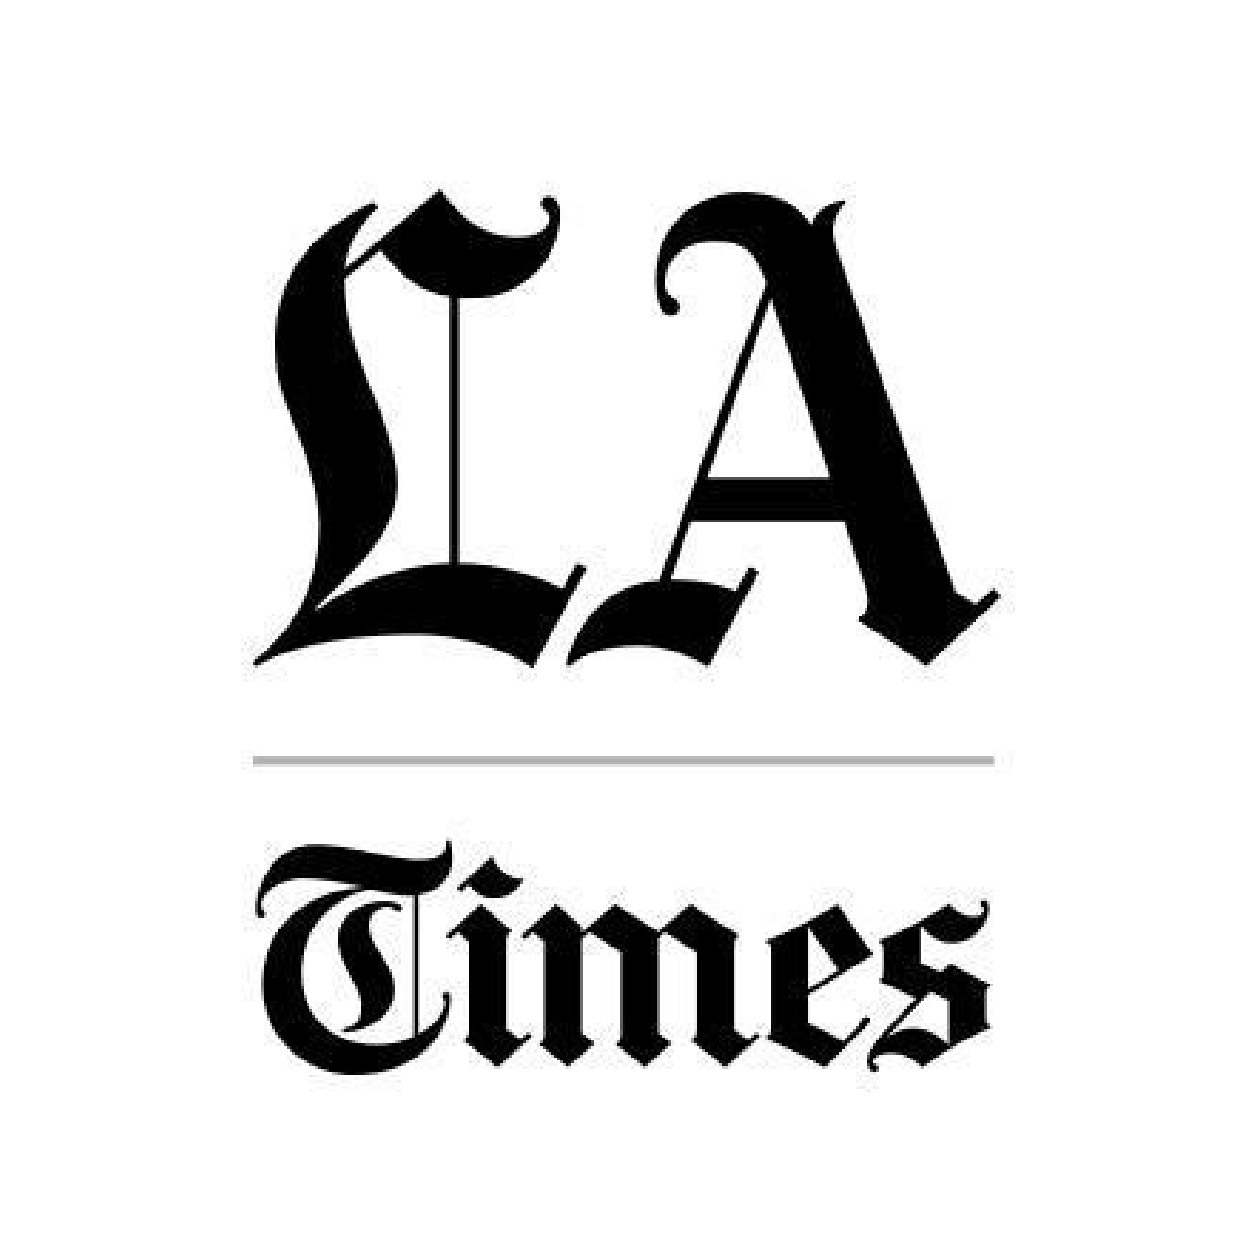 LA Times article